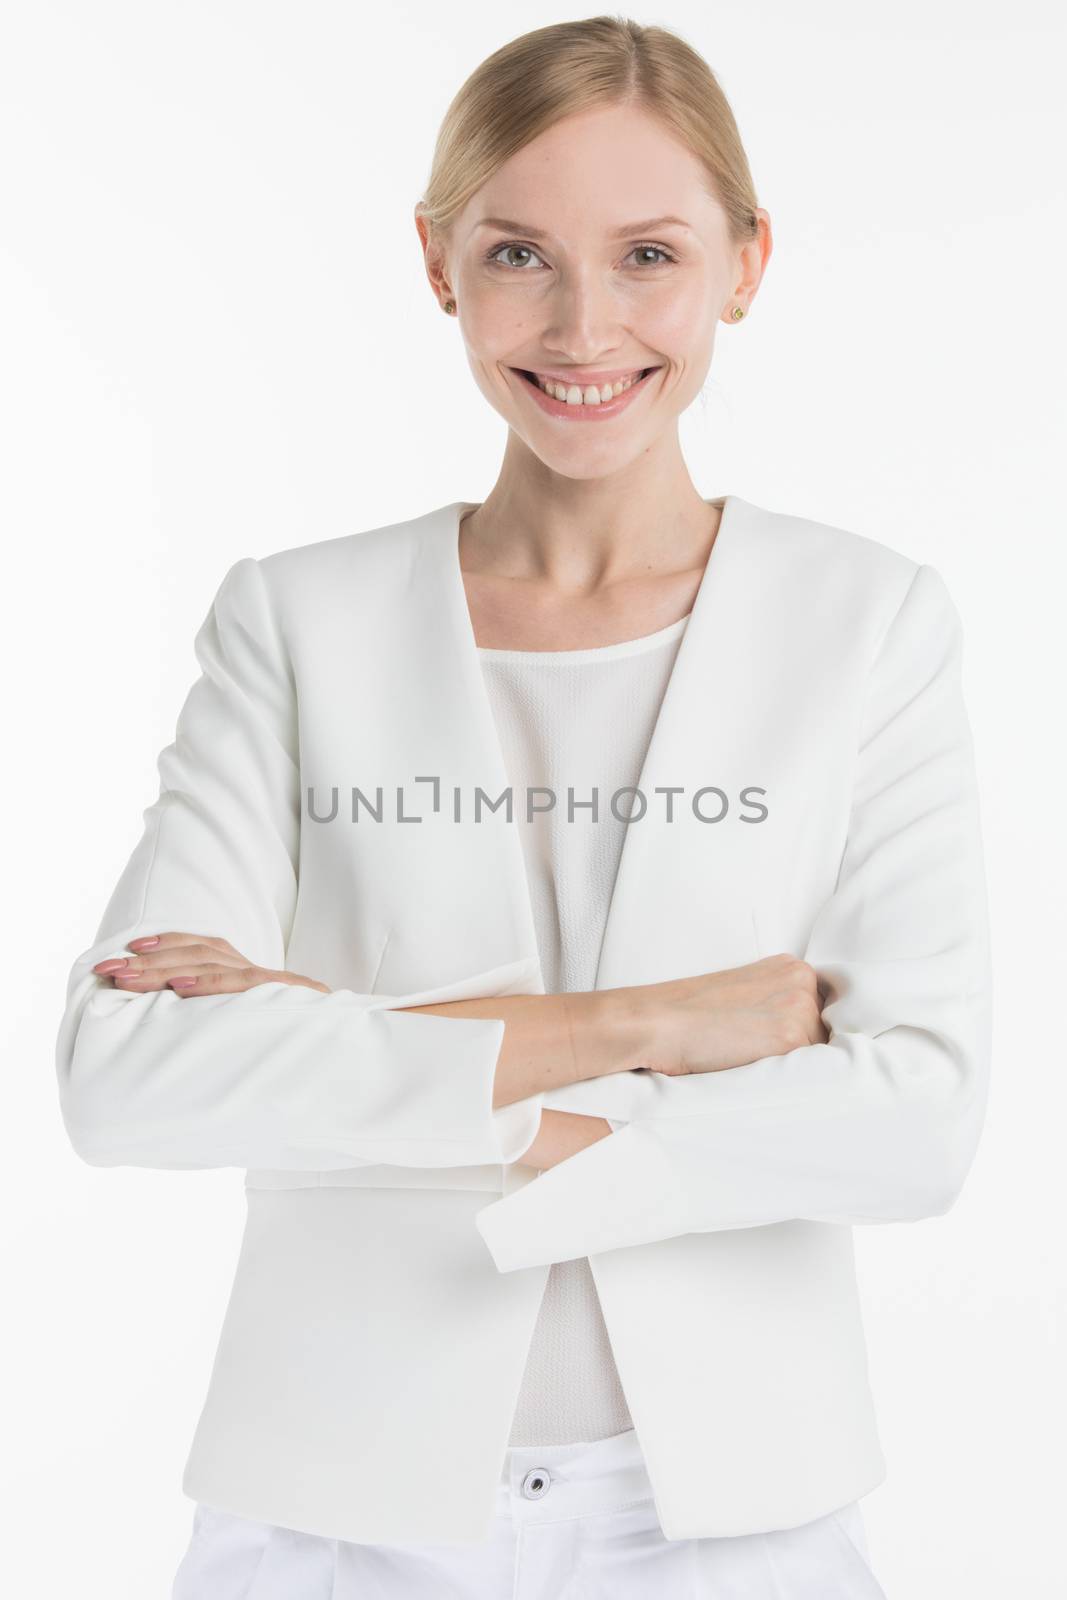 Mature smiling woman by Yellowj